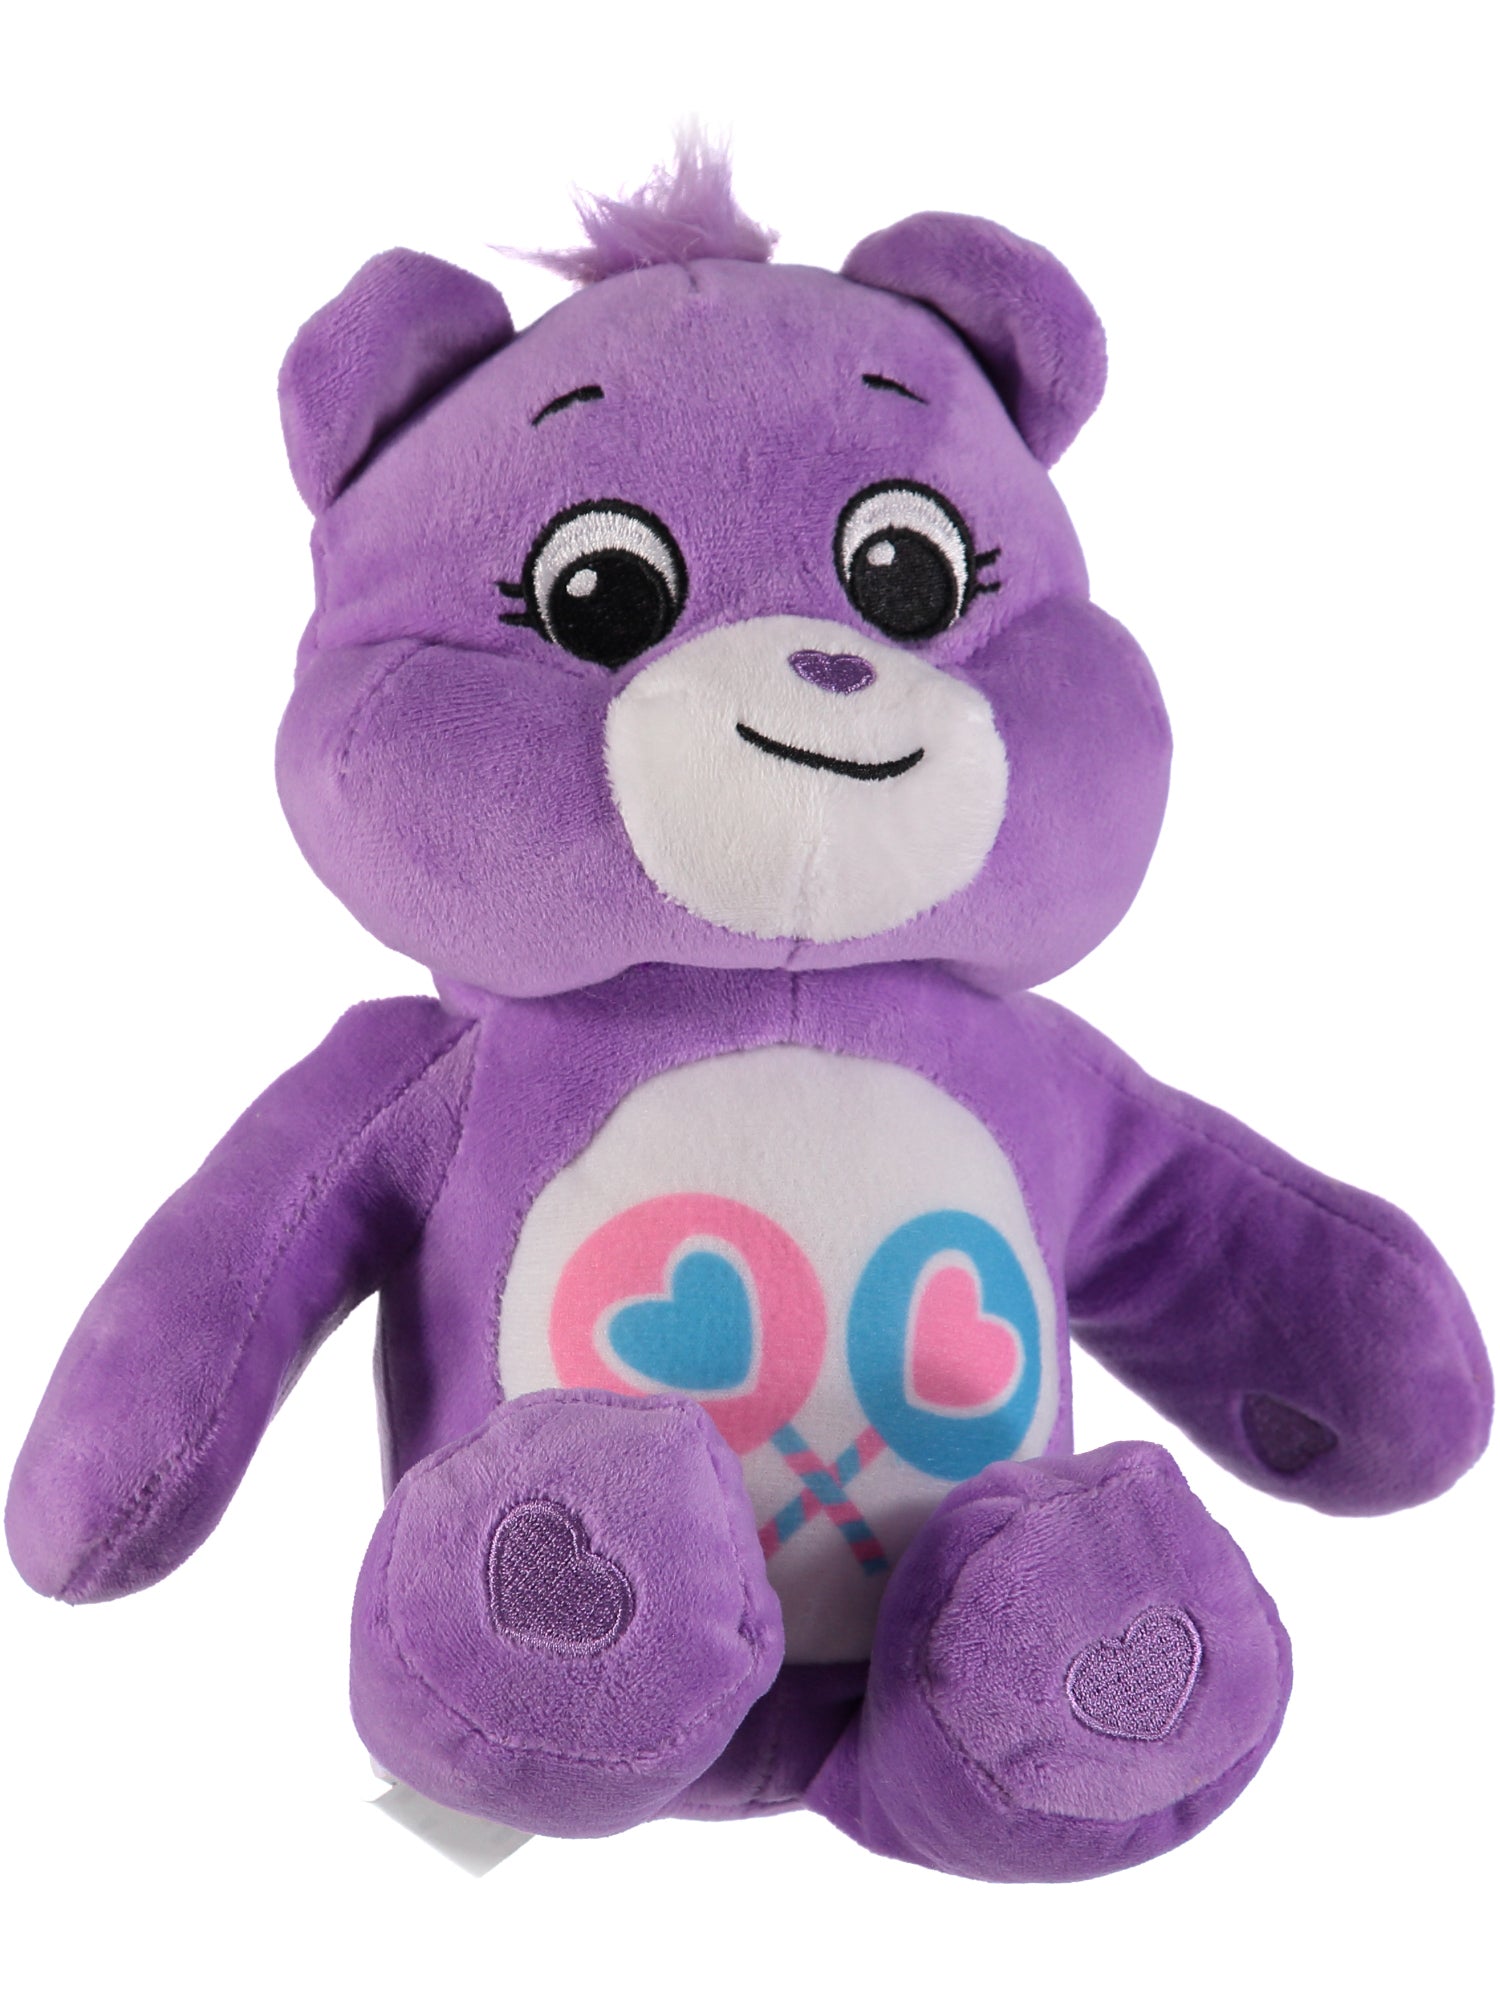 Care Bears Plush Doll Toy - 1 Care Bear